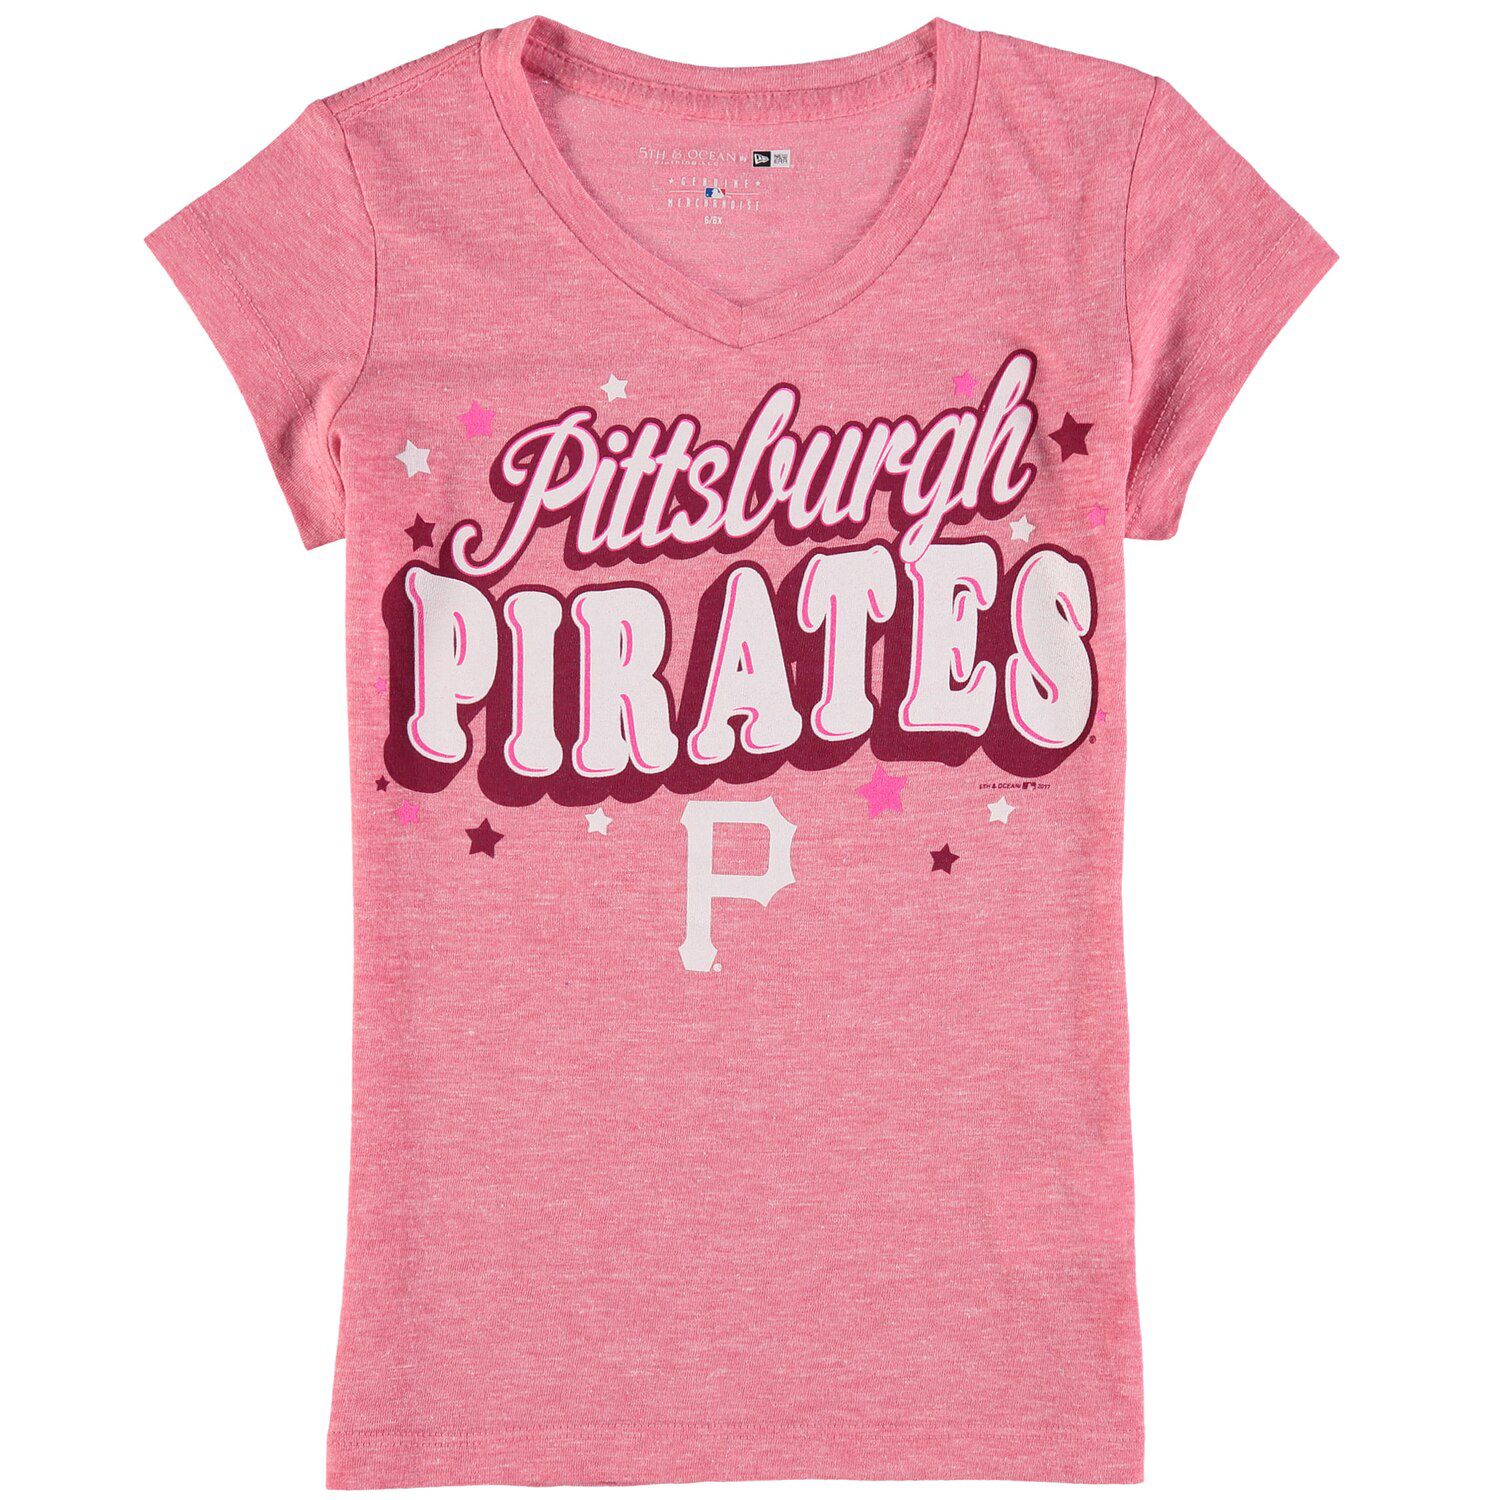 pittsburgh pirates youth shirts